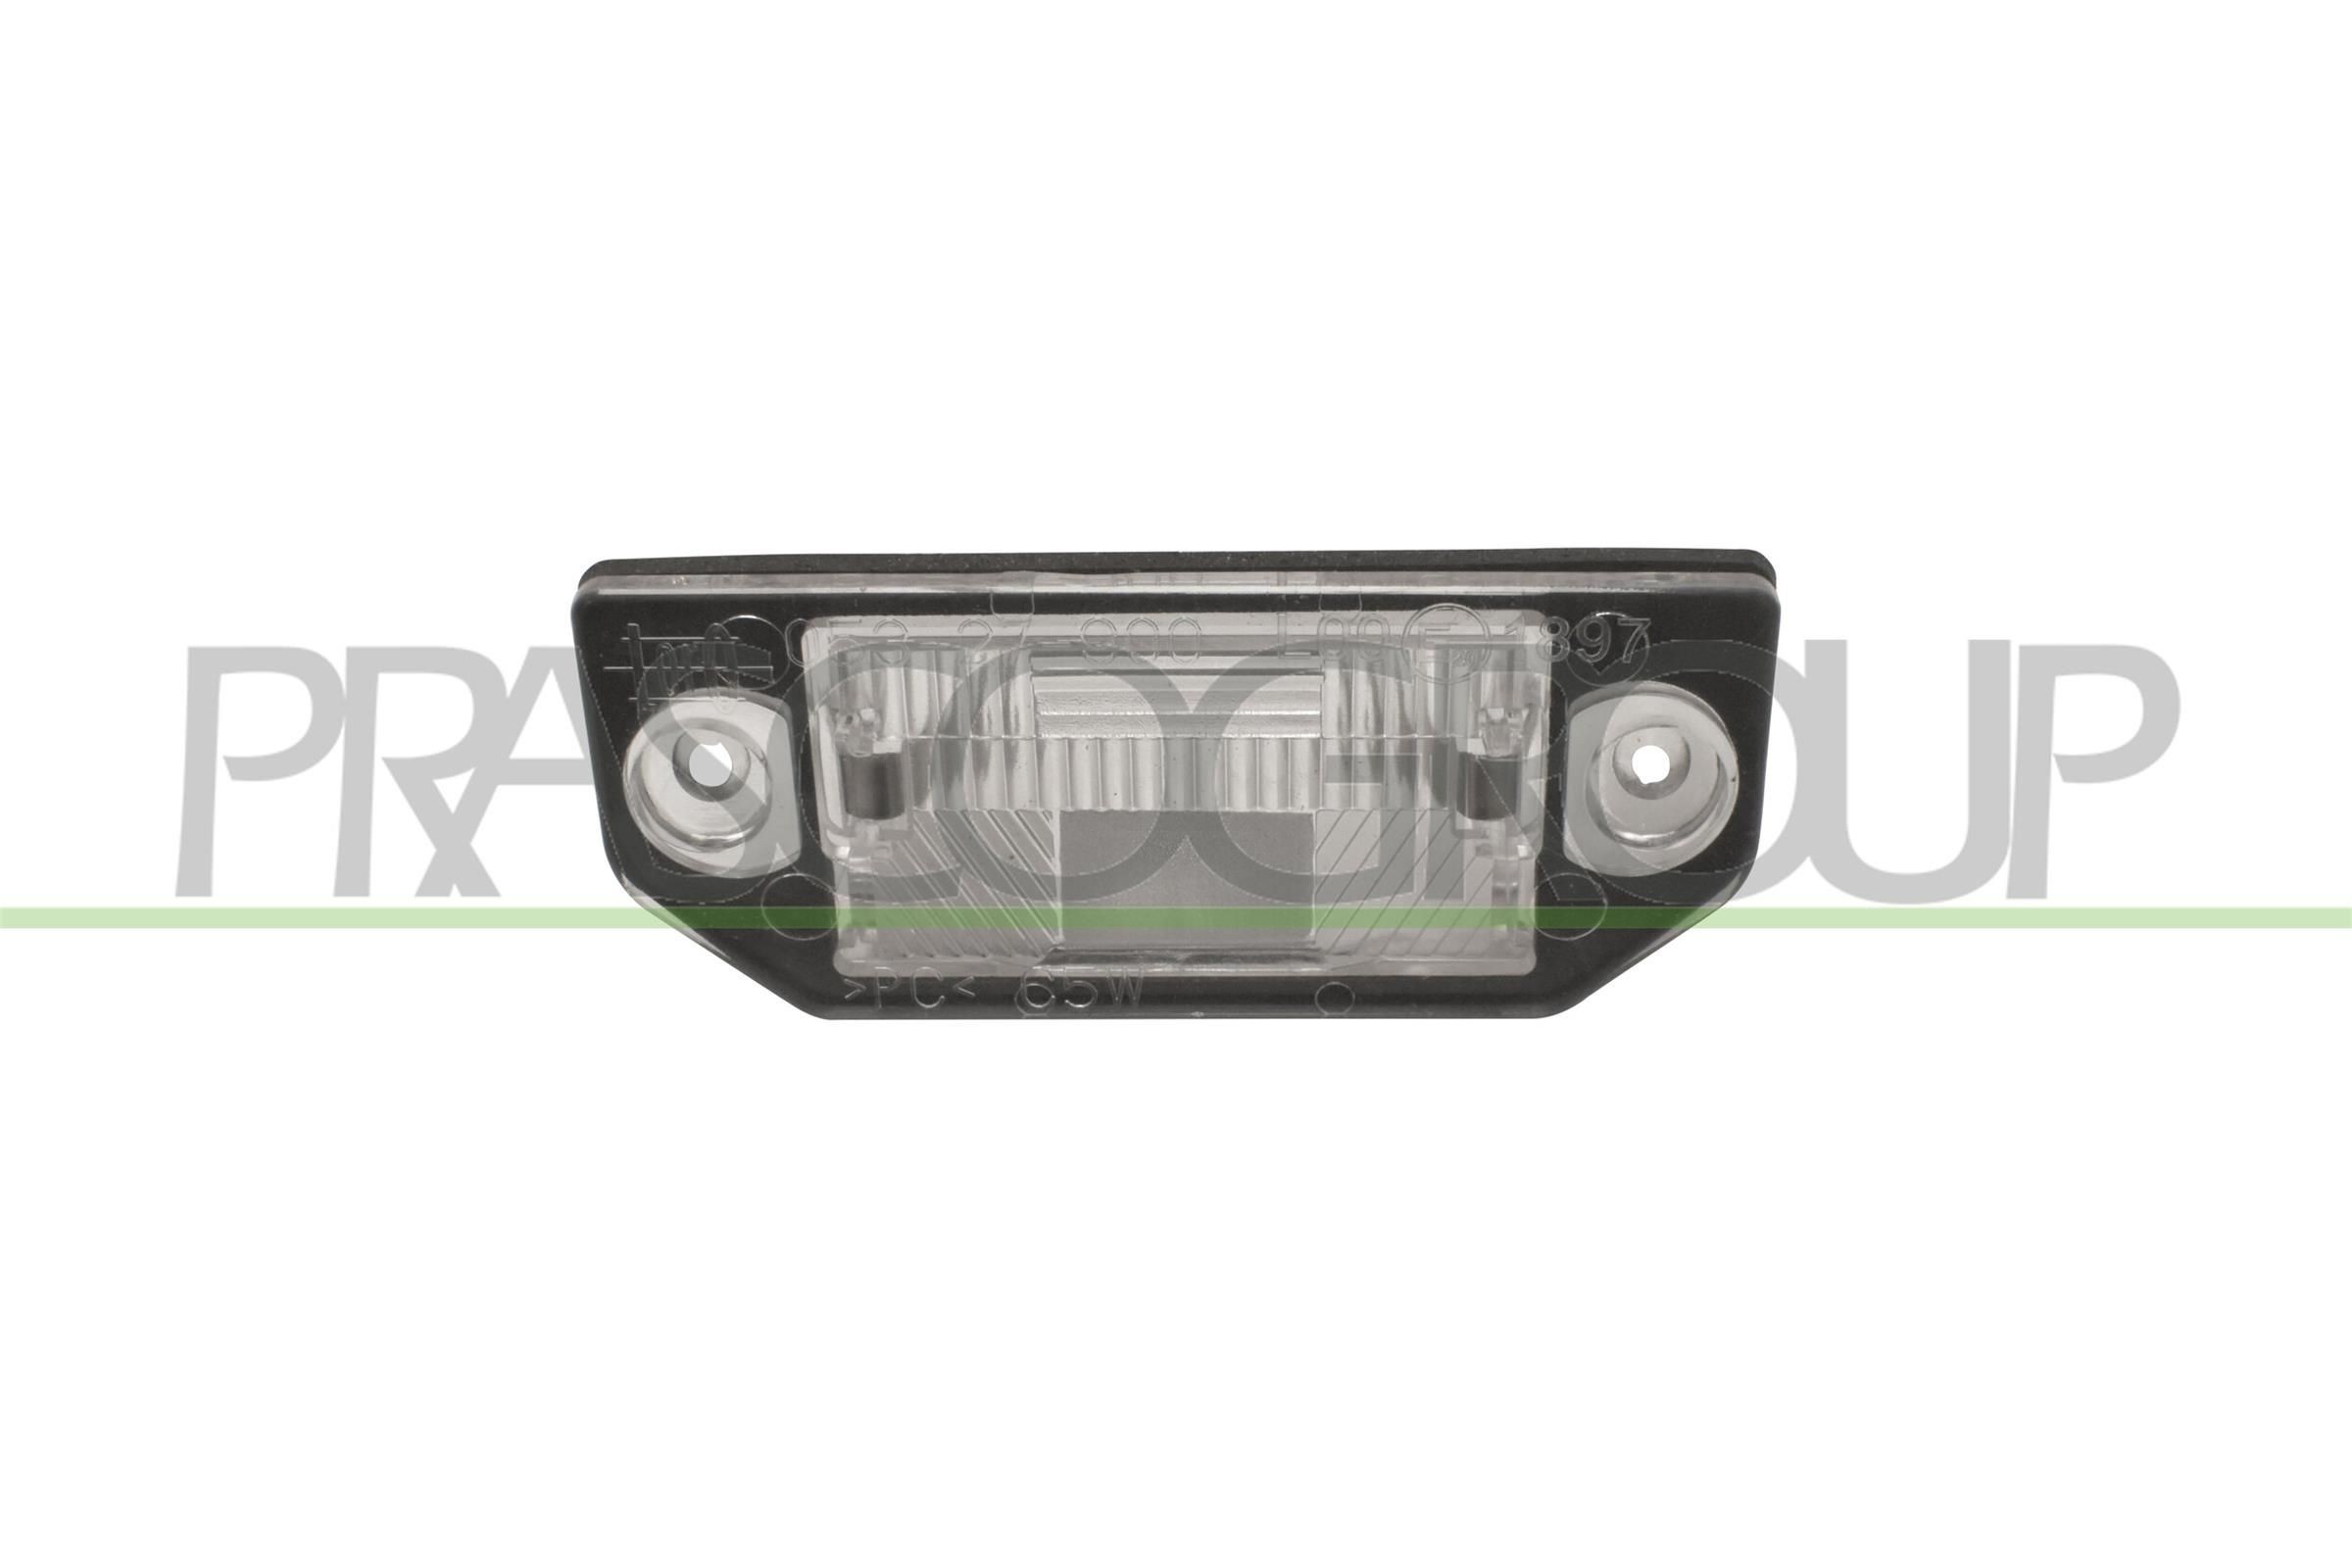 Pack de 2 módulos de LED para placa de matrícula trasera de VW Multivan/Transporter  T5 - Antierror ODB